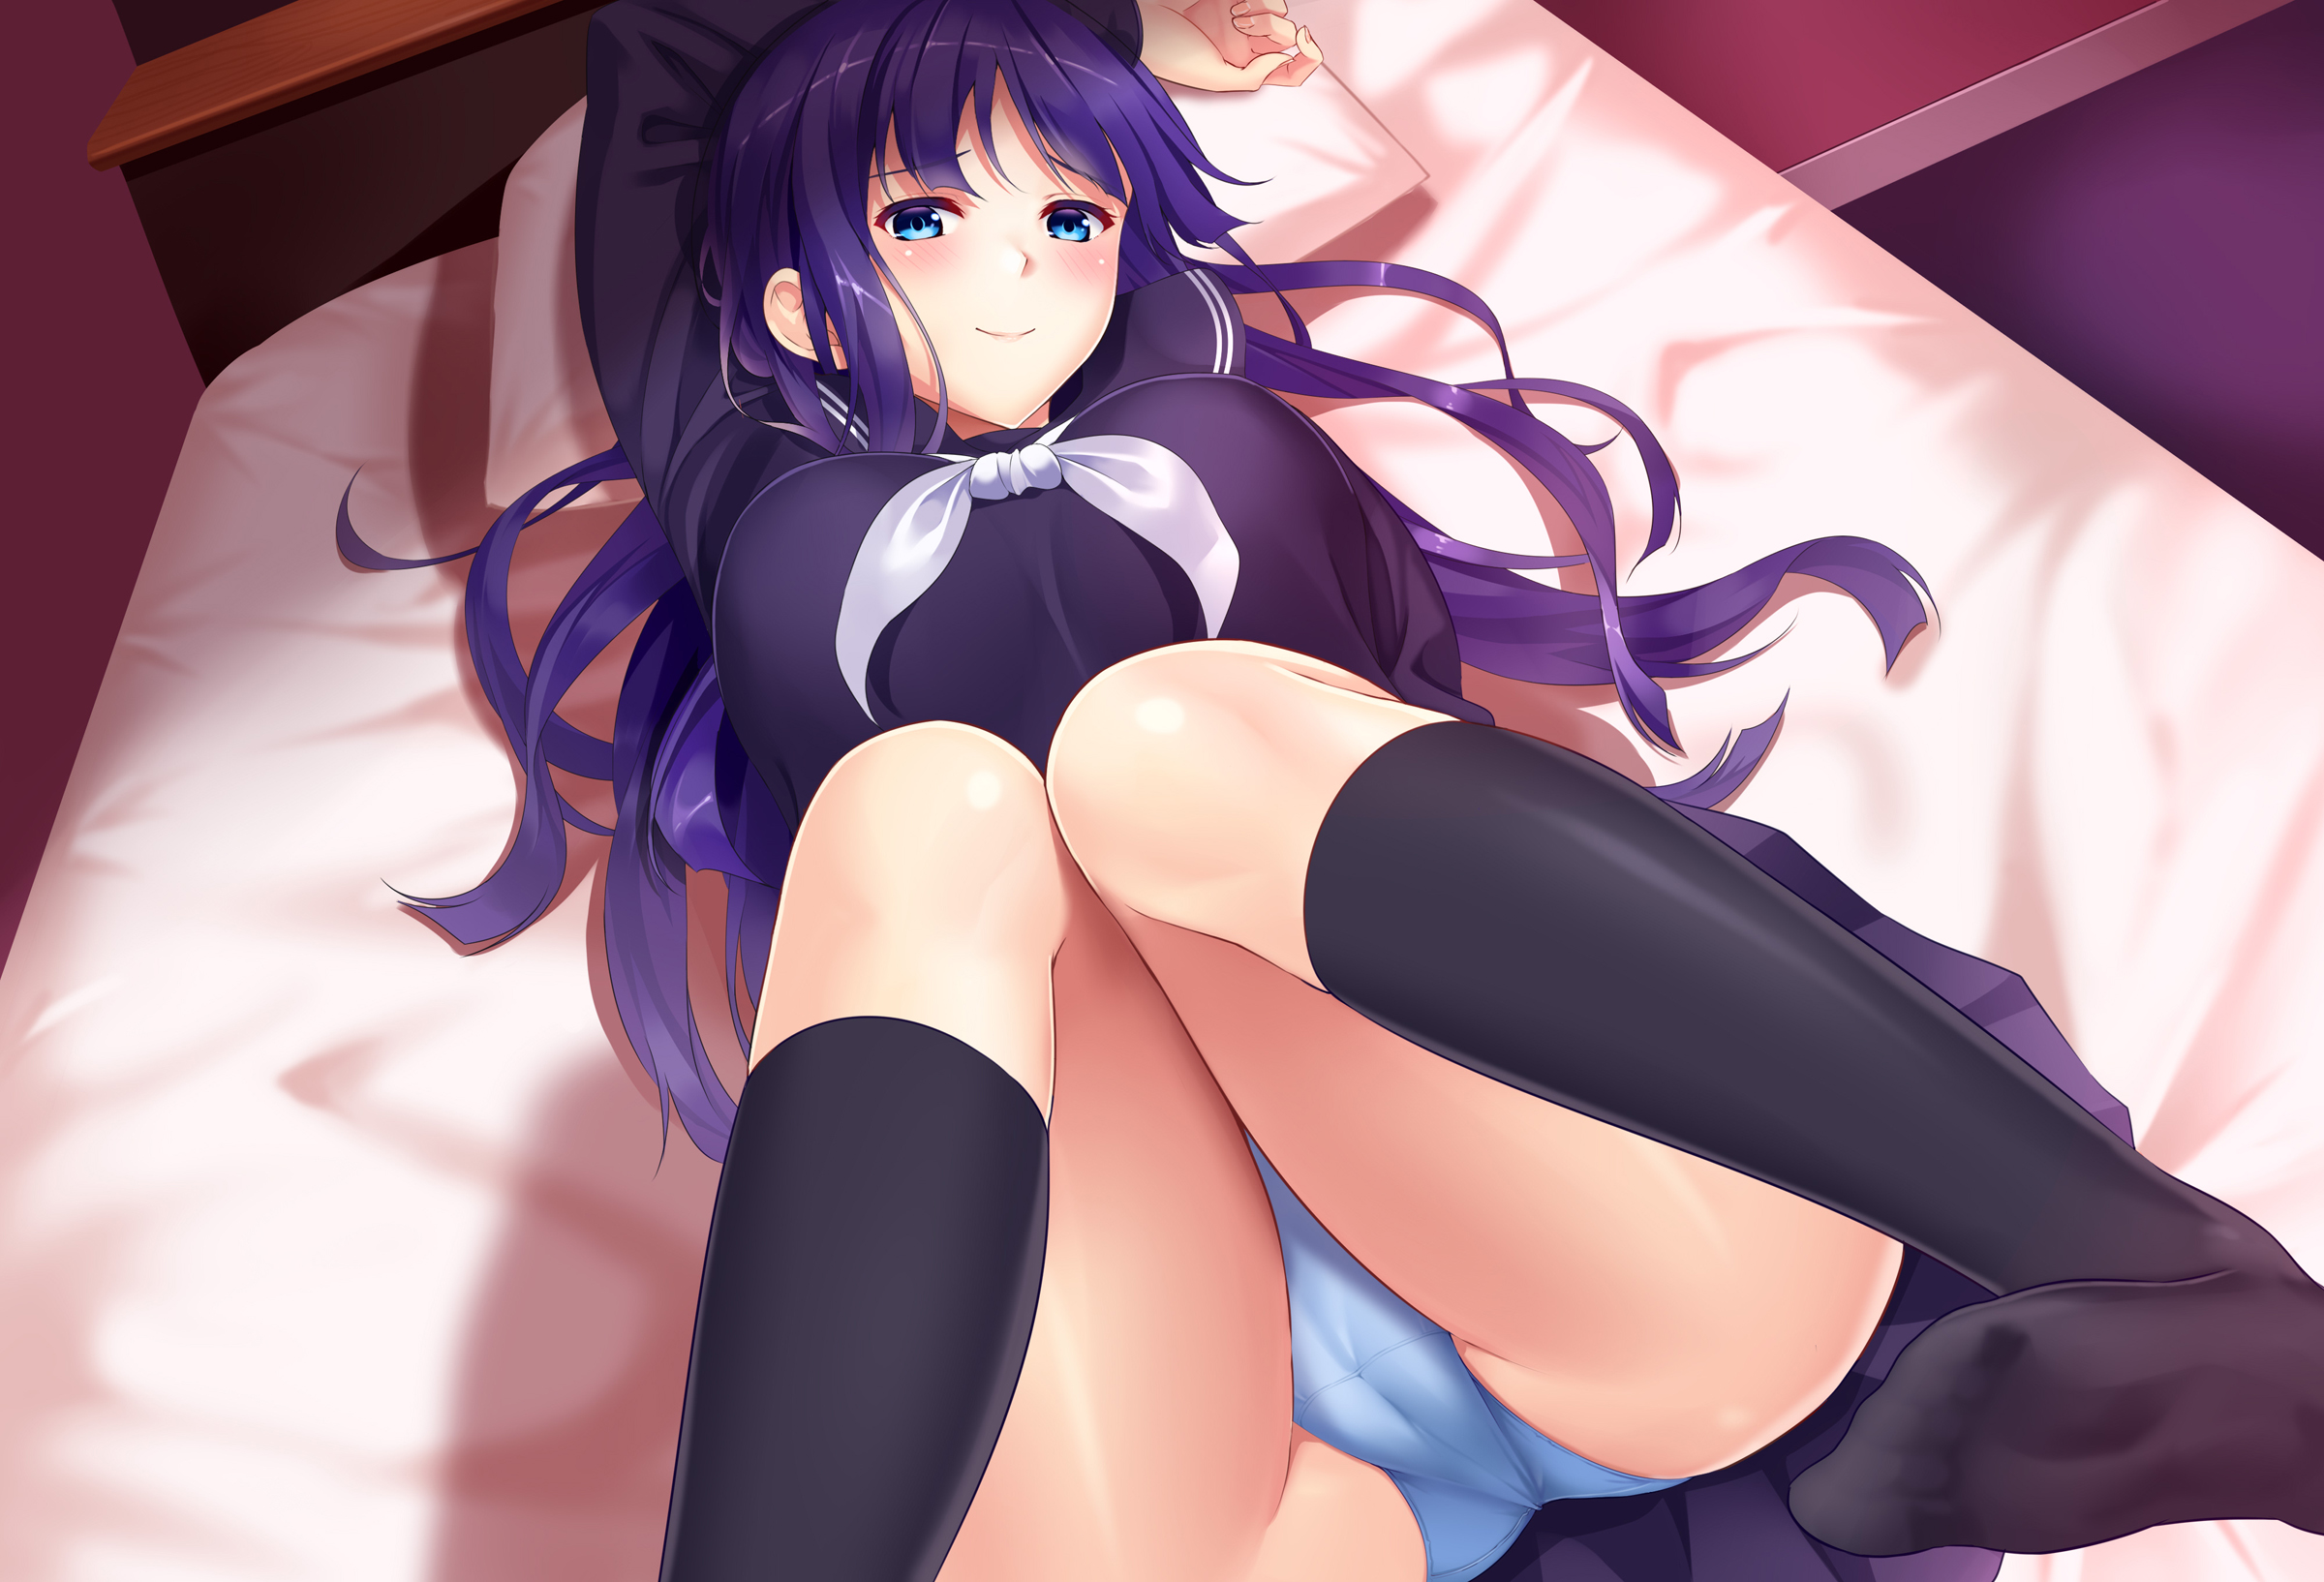 Anime 2400x1634 huyumitsu anime anime girls purple hair blue eyes panties cameltoe thighs legs together